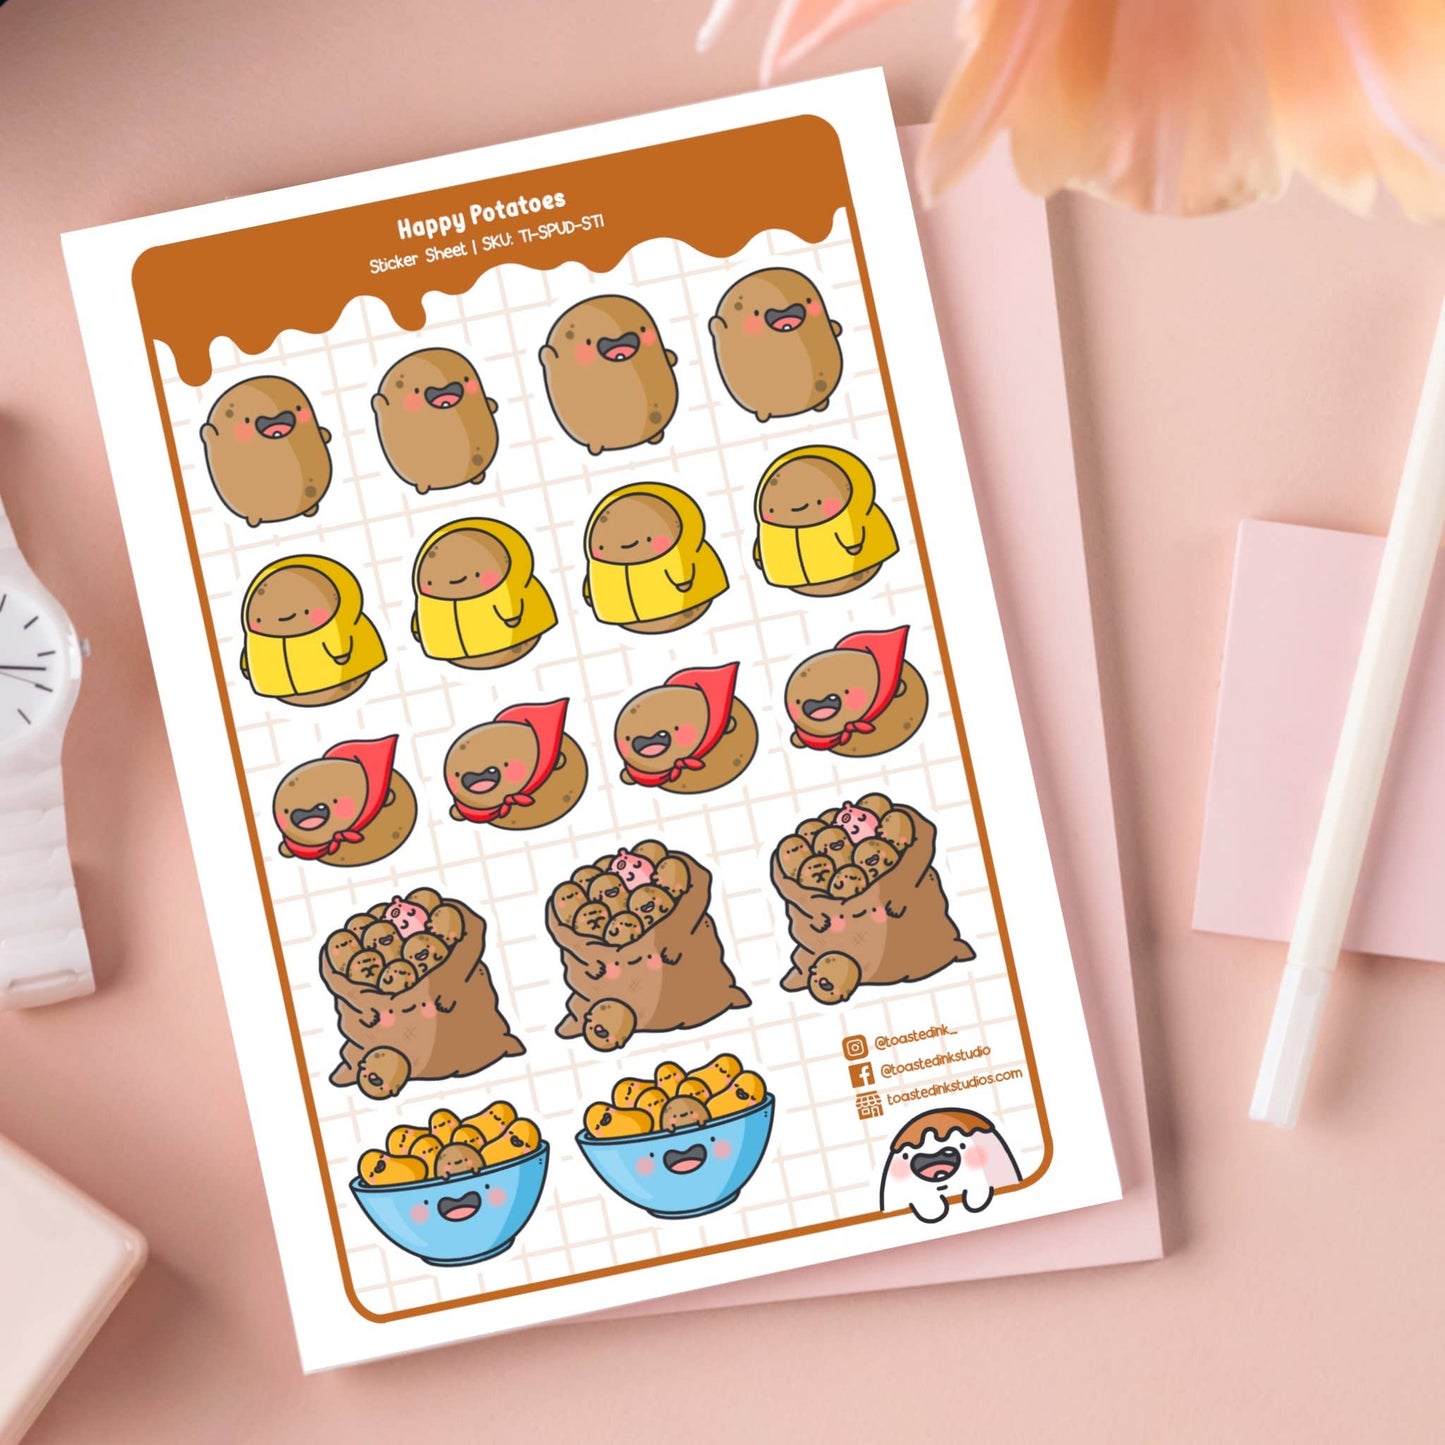 Toastedink - Cute Potatoes Sticker Sheets